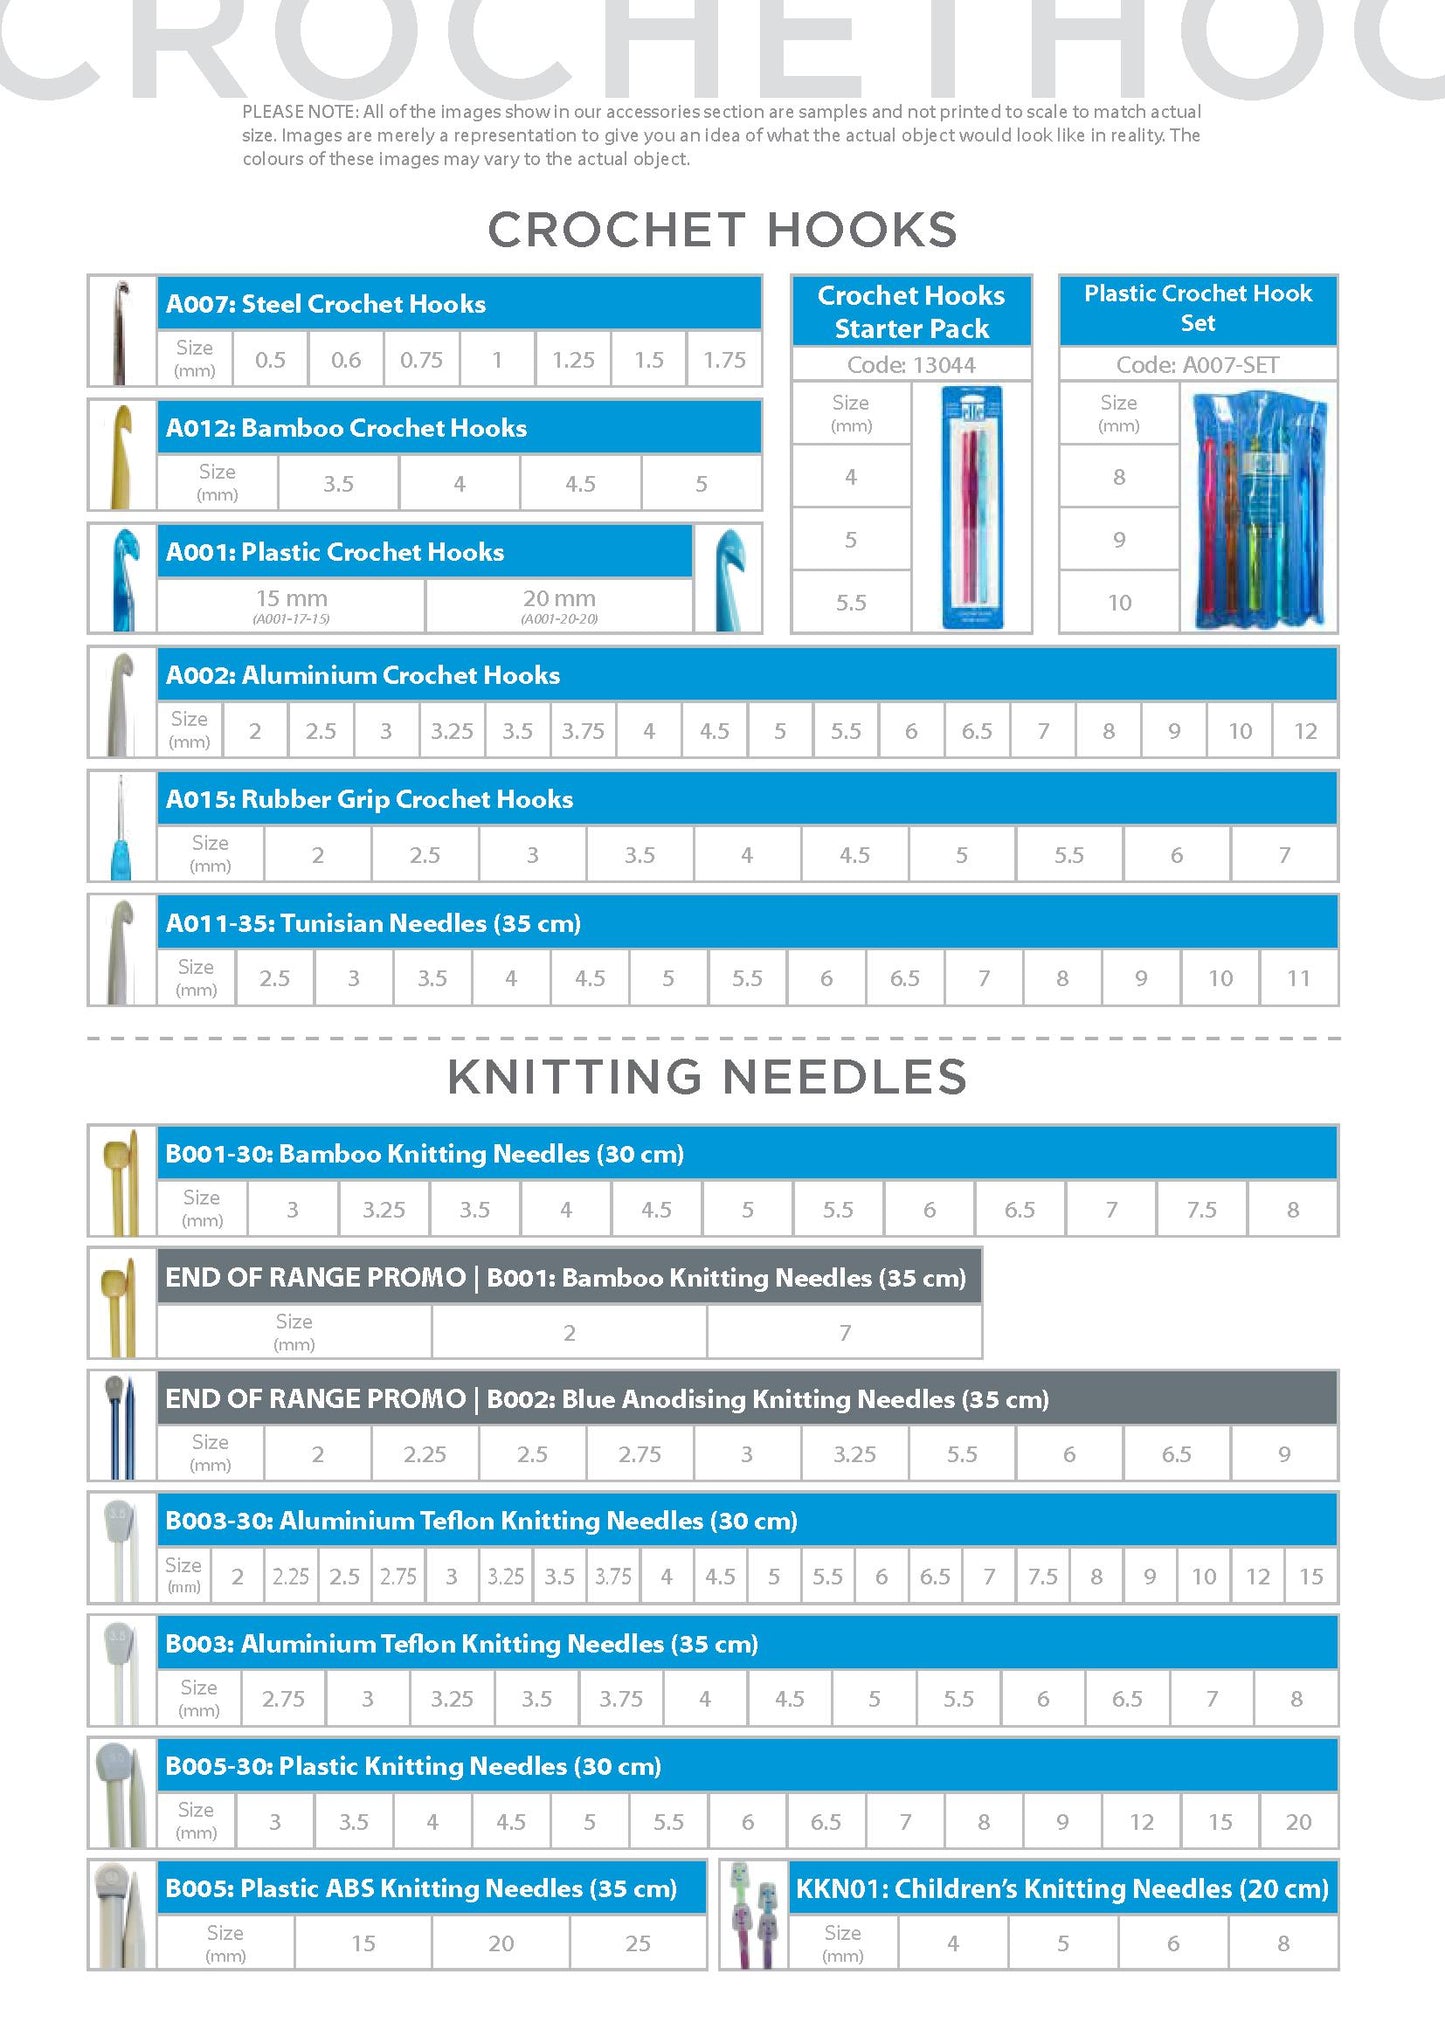 Aluminium Teflon Knitting Needles 35cm